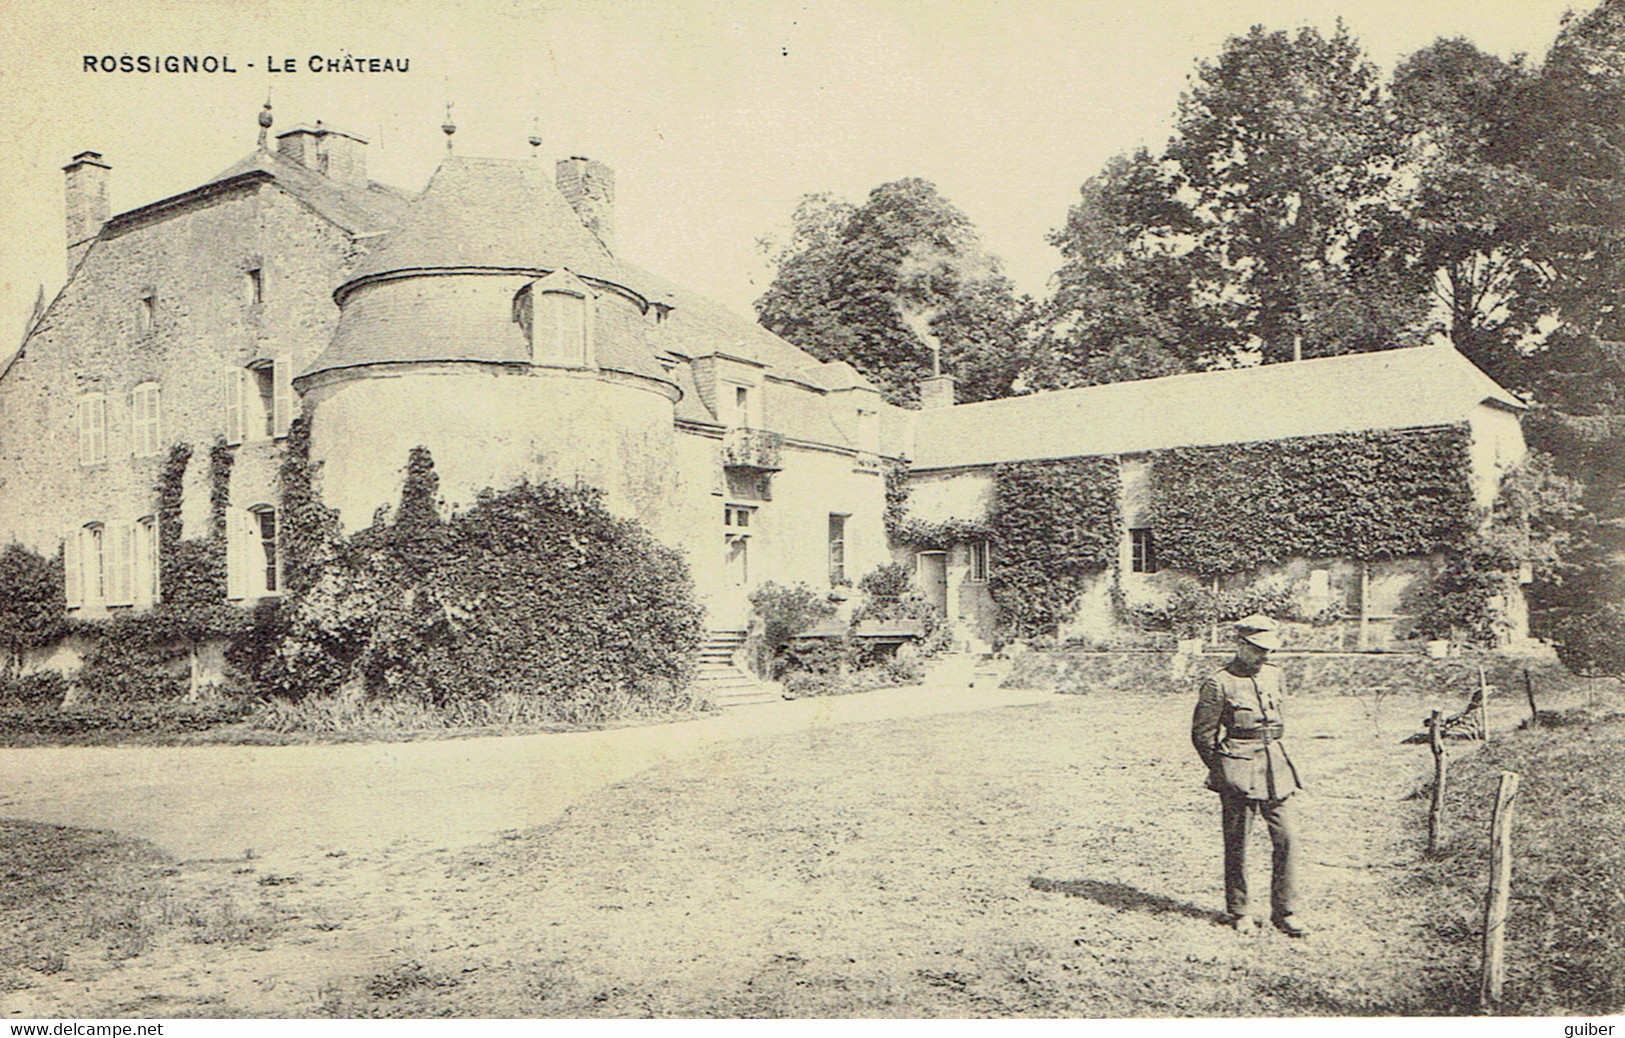 Rossignol Le Chateau - Tintigny